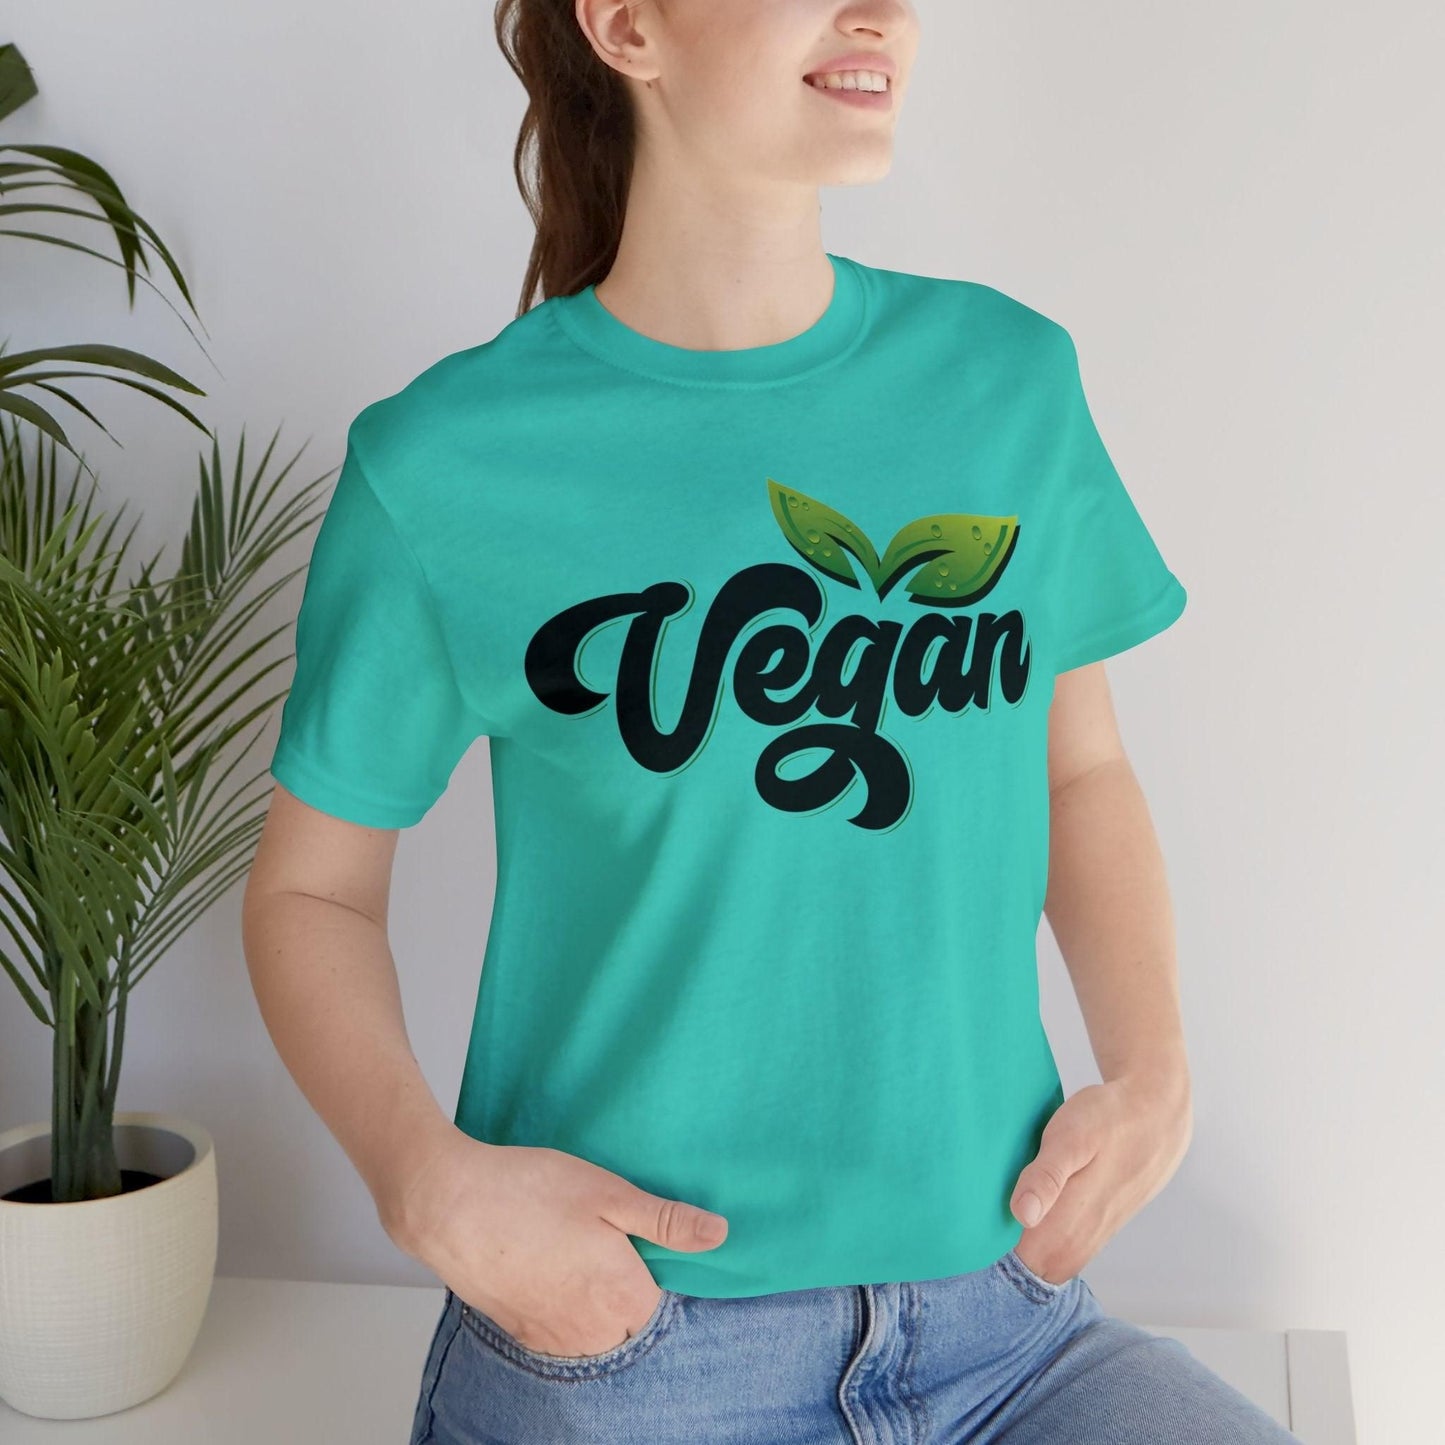 Vegan Unisex  Short Sleeve Tee T-Shirt Teal S 